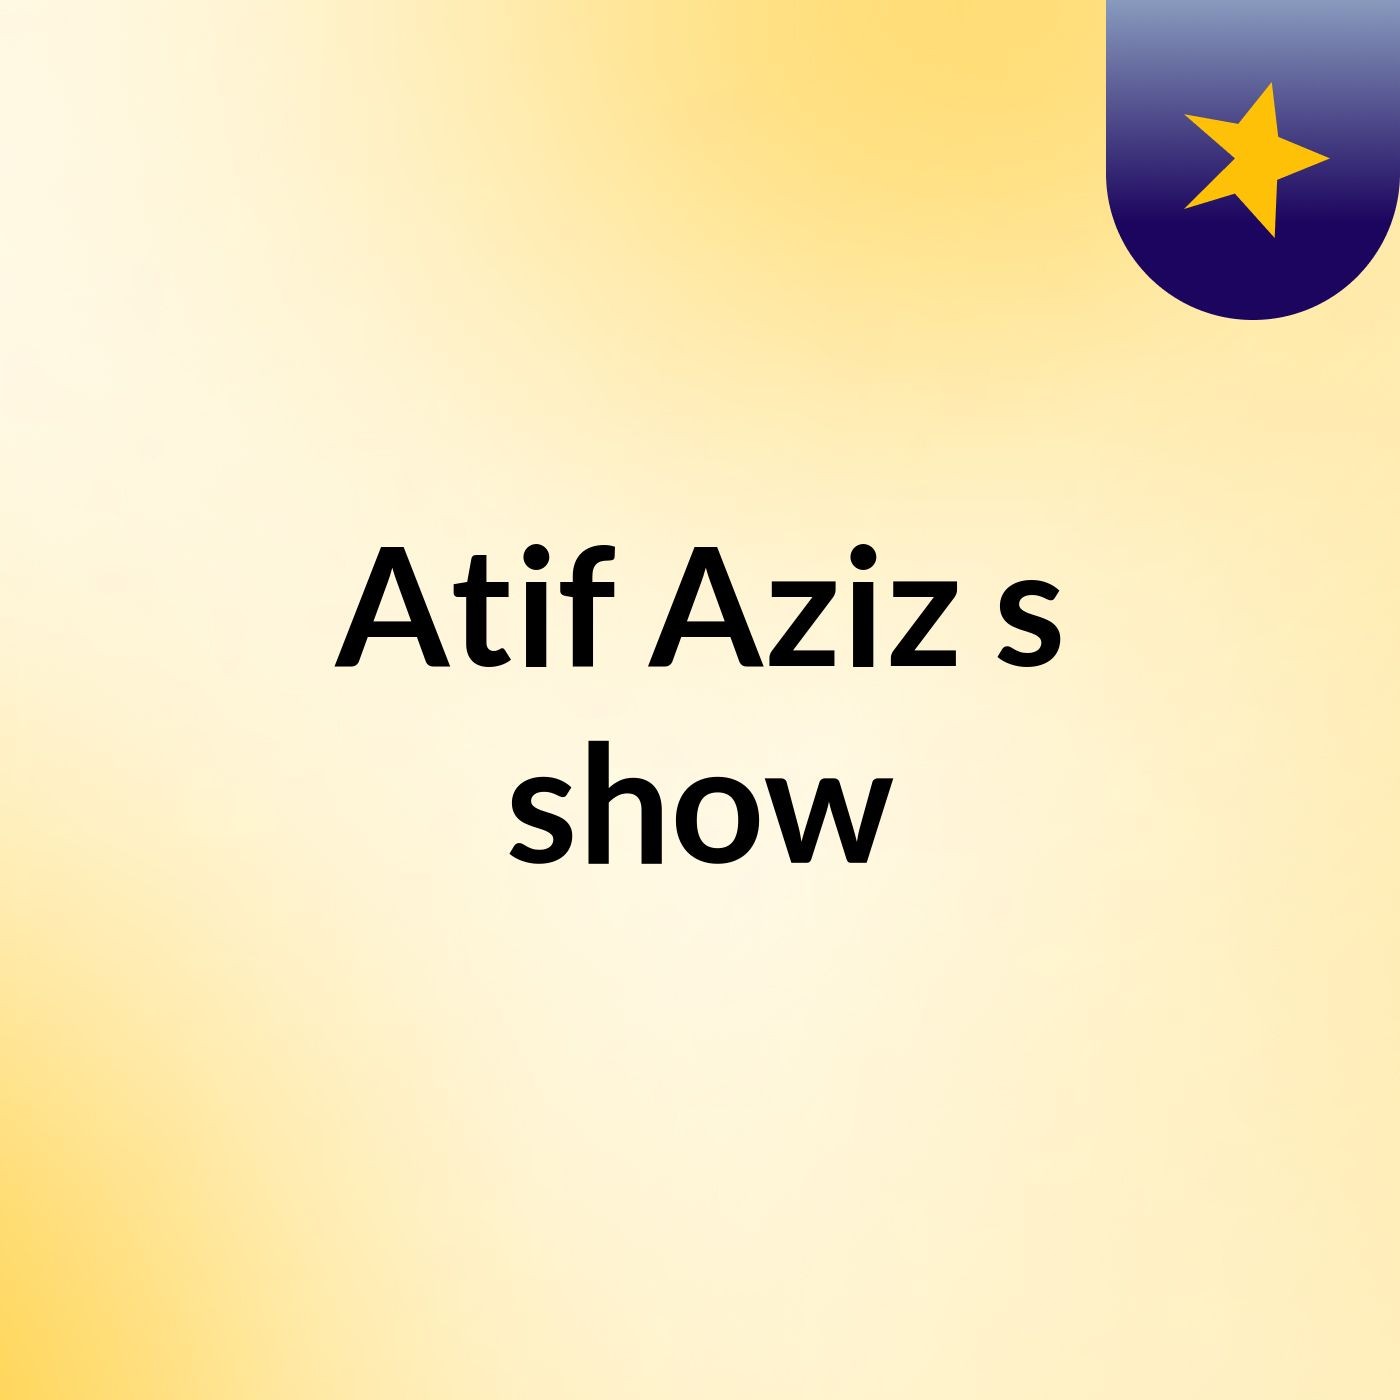 Atif Aziz's show